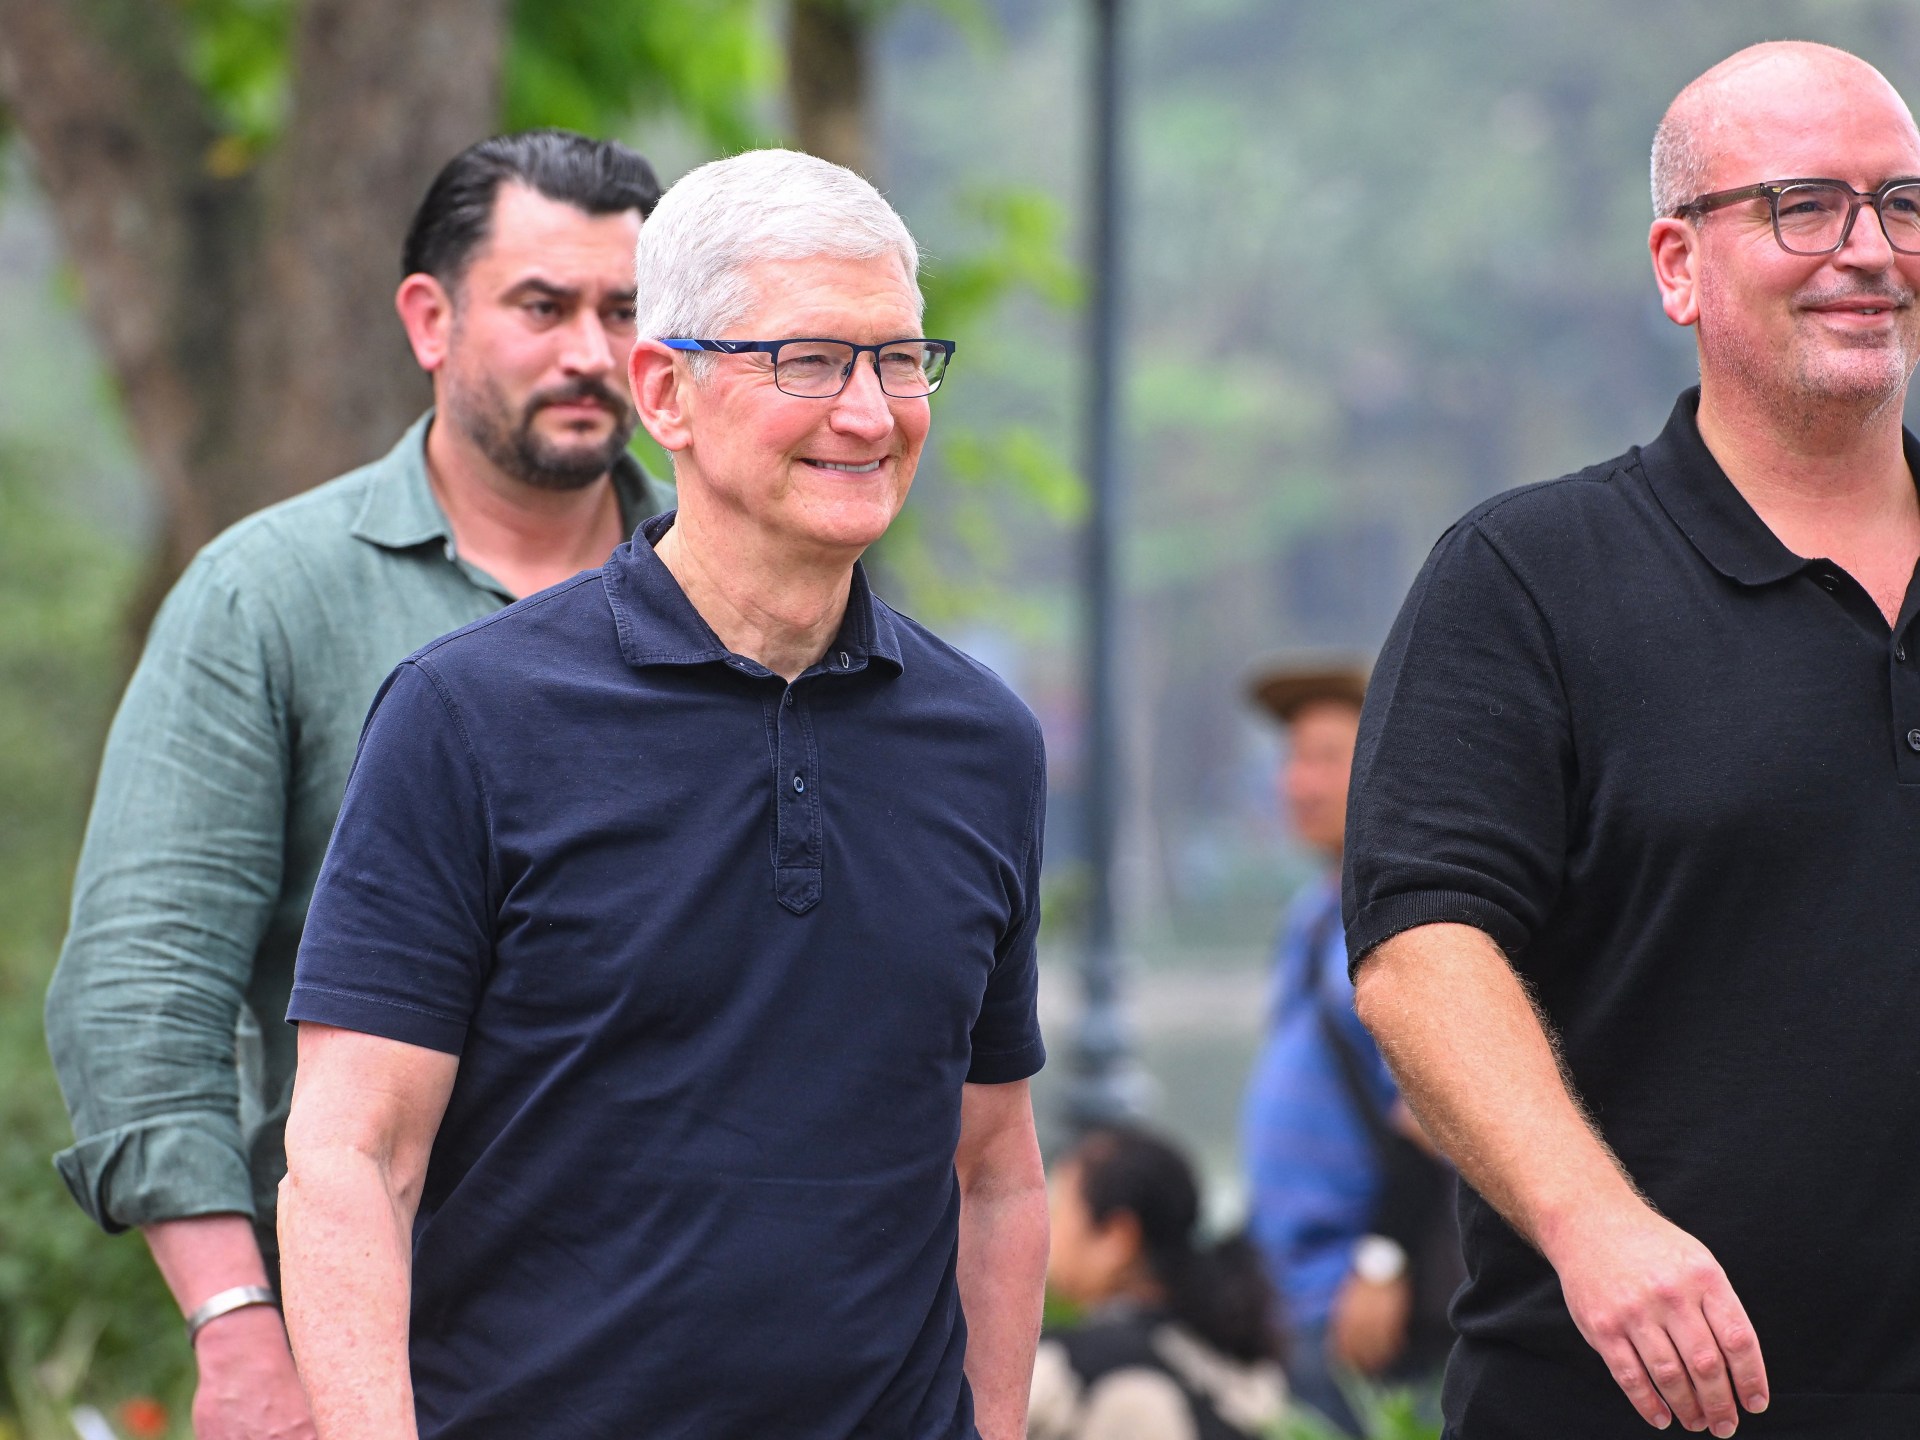 Apple announces investment in Vietnam as Tim Cook visits Hanoi